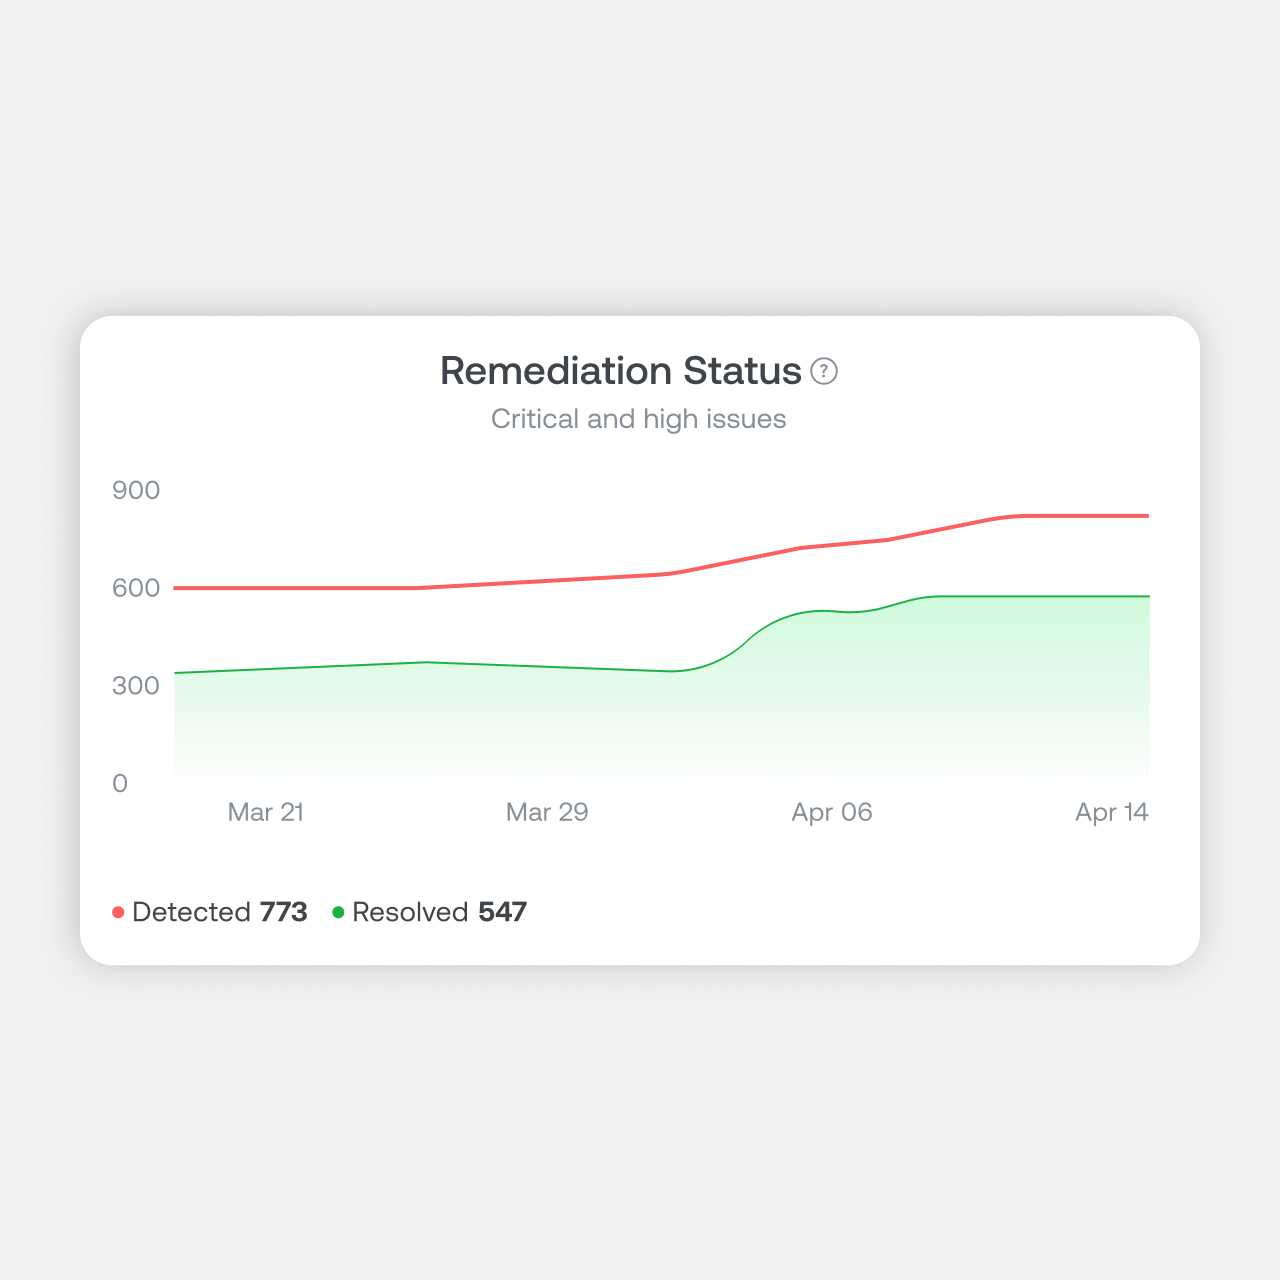 Image of remediation status graph